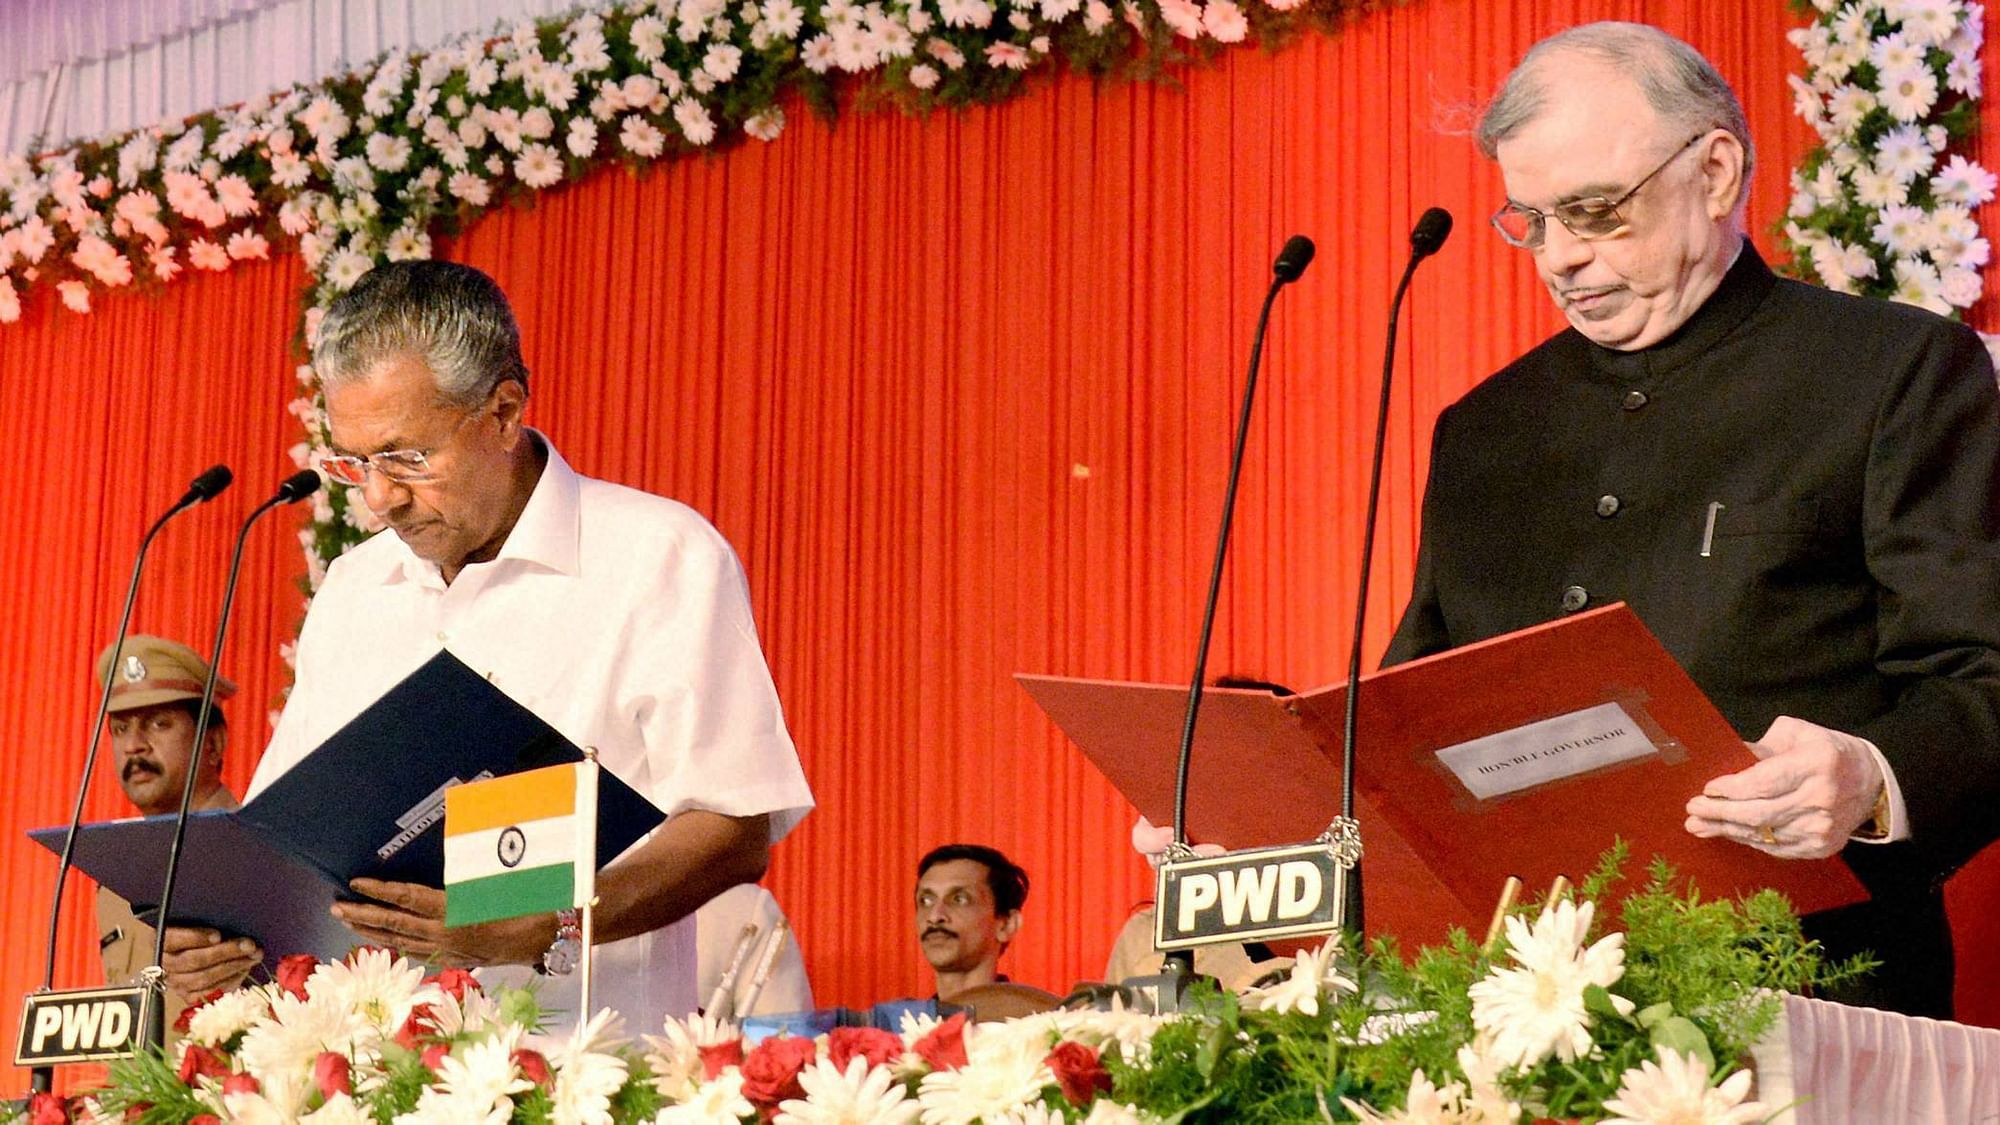 Kerala Governor P Sathasivam administers oath to Pinarayi Vijayan as the new Chief Minister of the state in Thiruvananthapuram on Wednesday. (Photo: PTI)